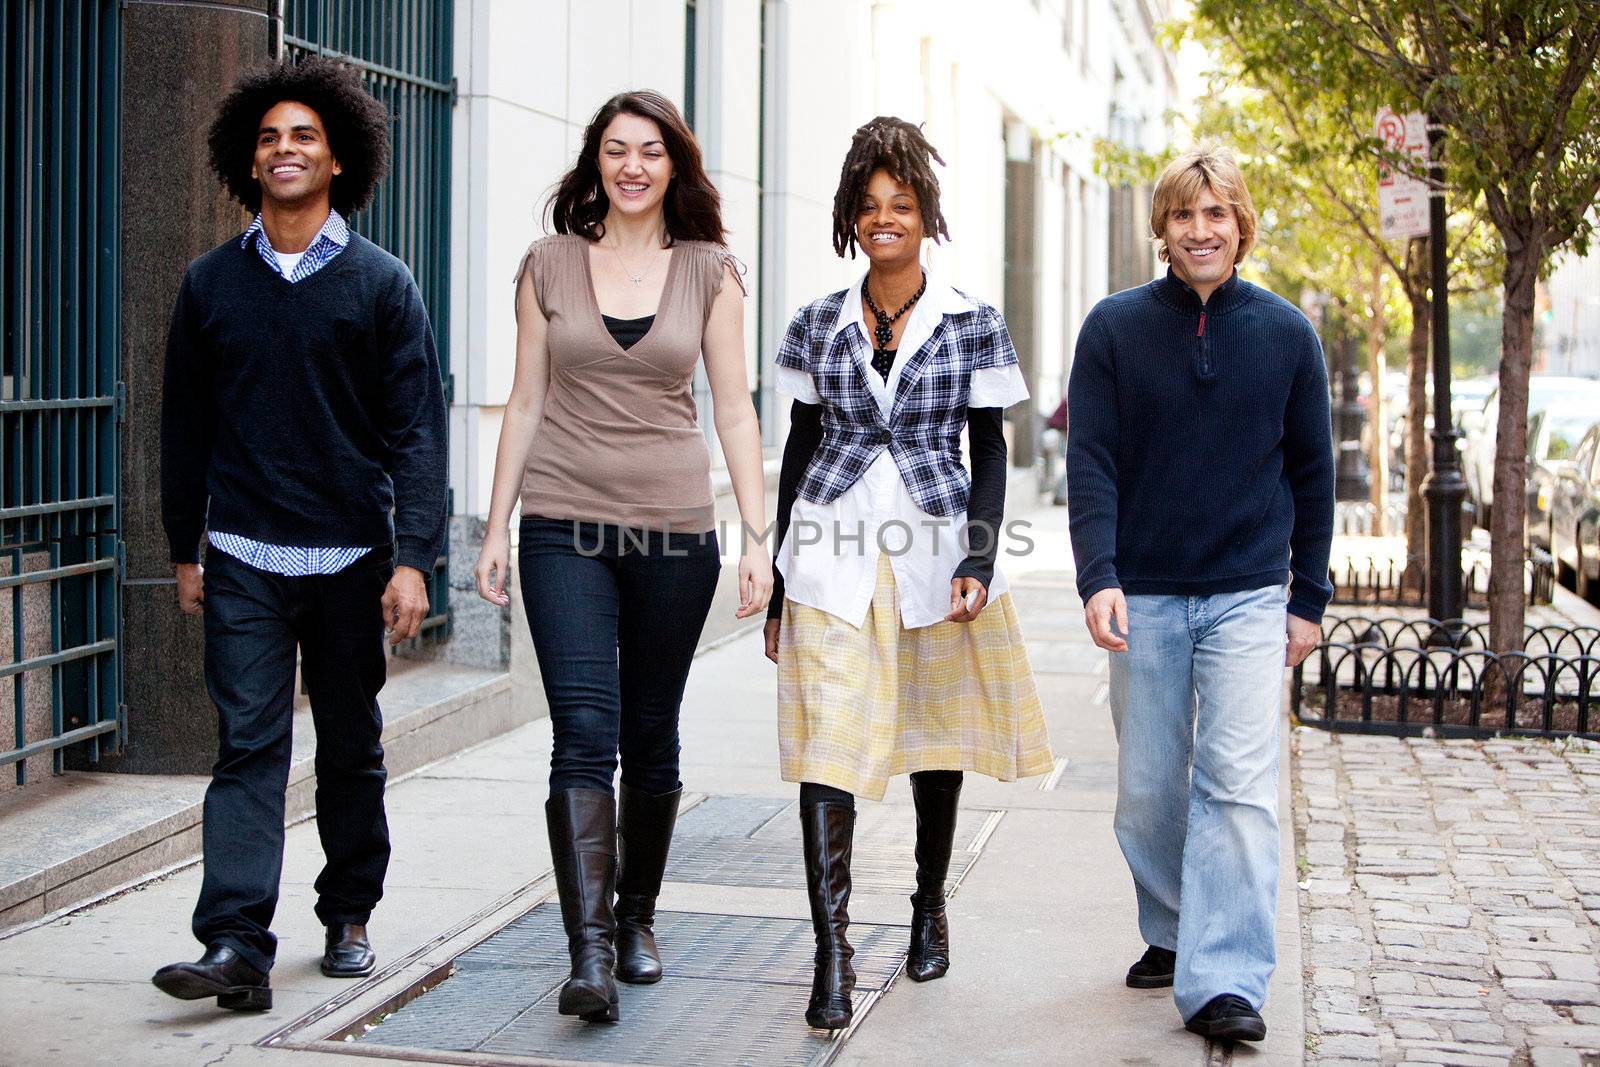 A group of friends walking on the sidewalk in an urban setting